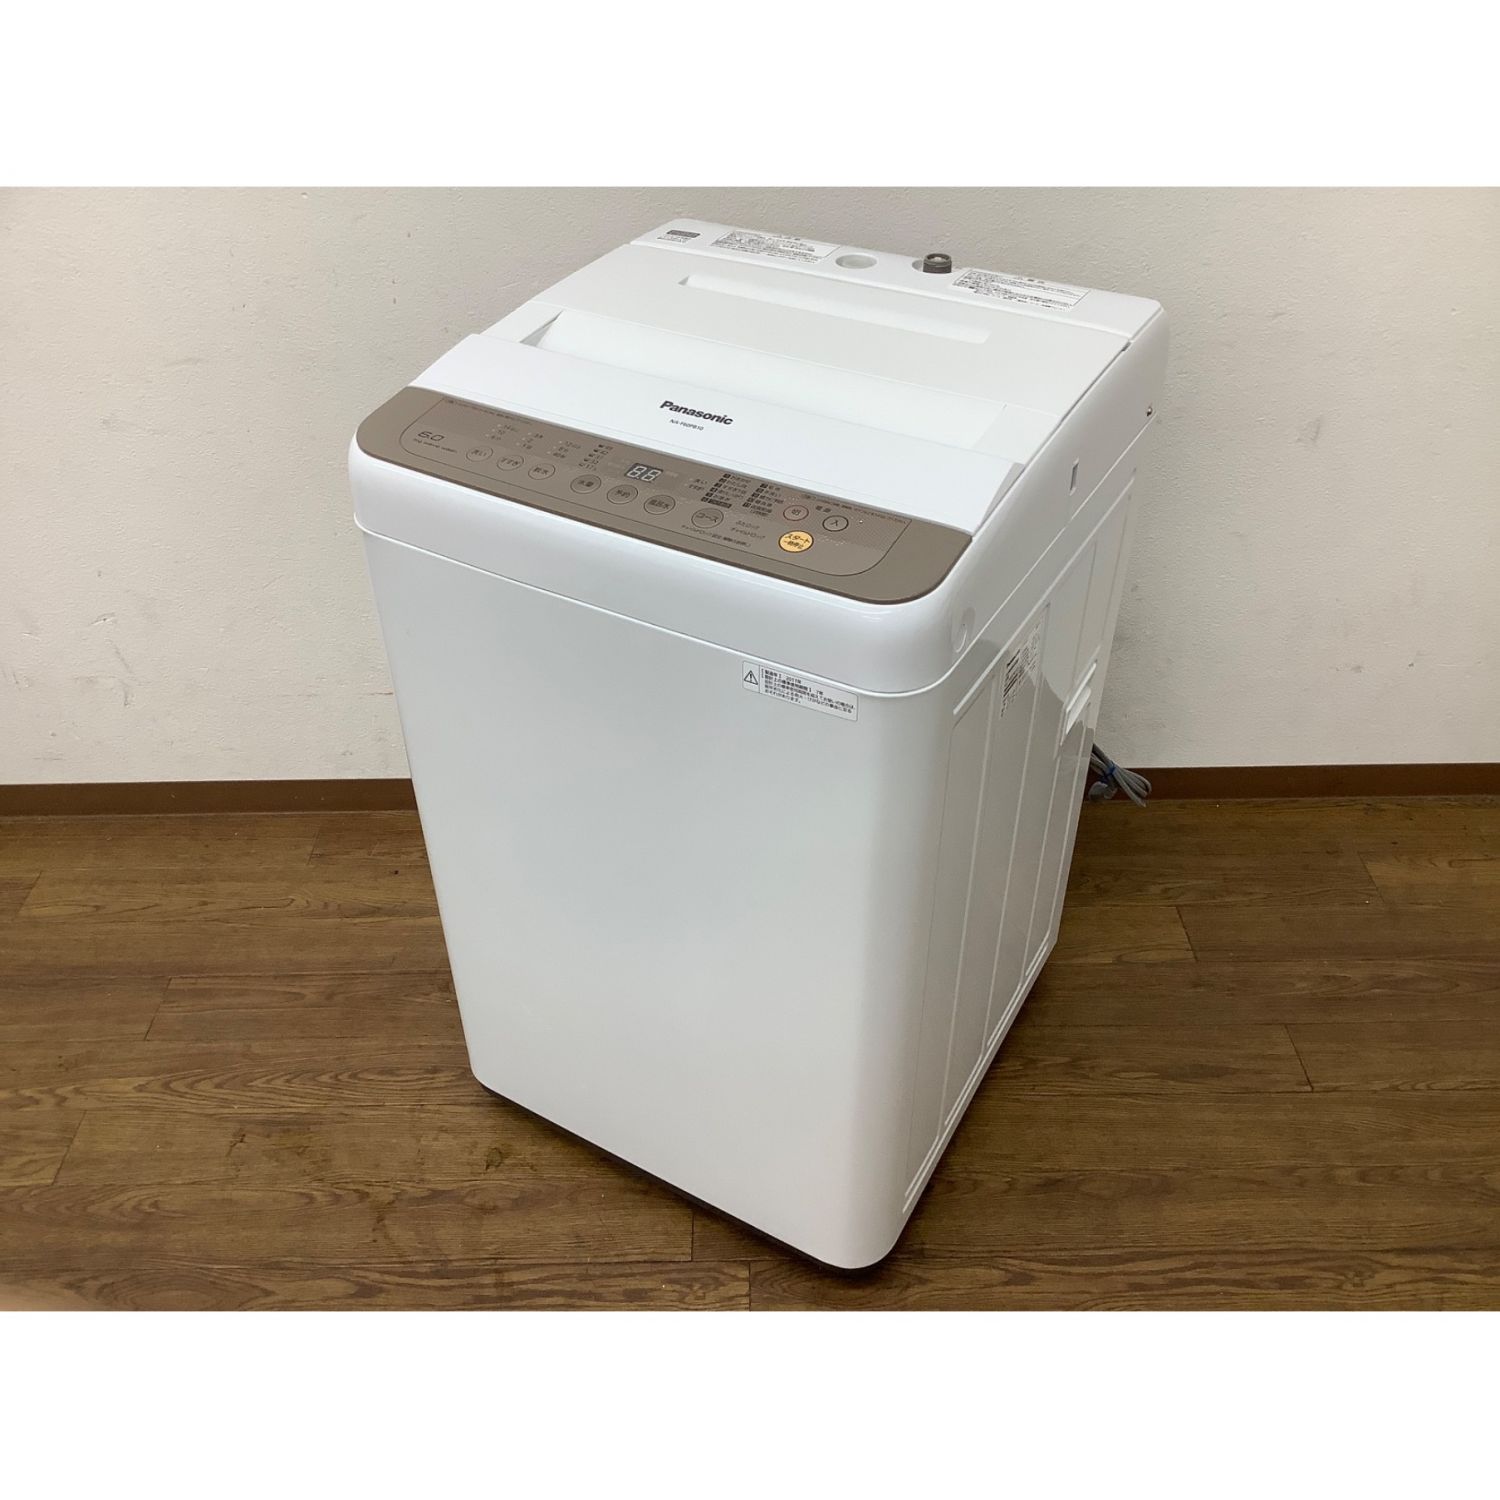 Panasonic (パナソニック) 全自動洗濯機 6.0kg NA-F60PB10 2017年製